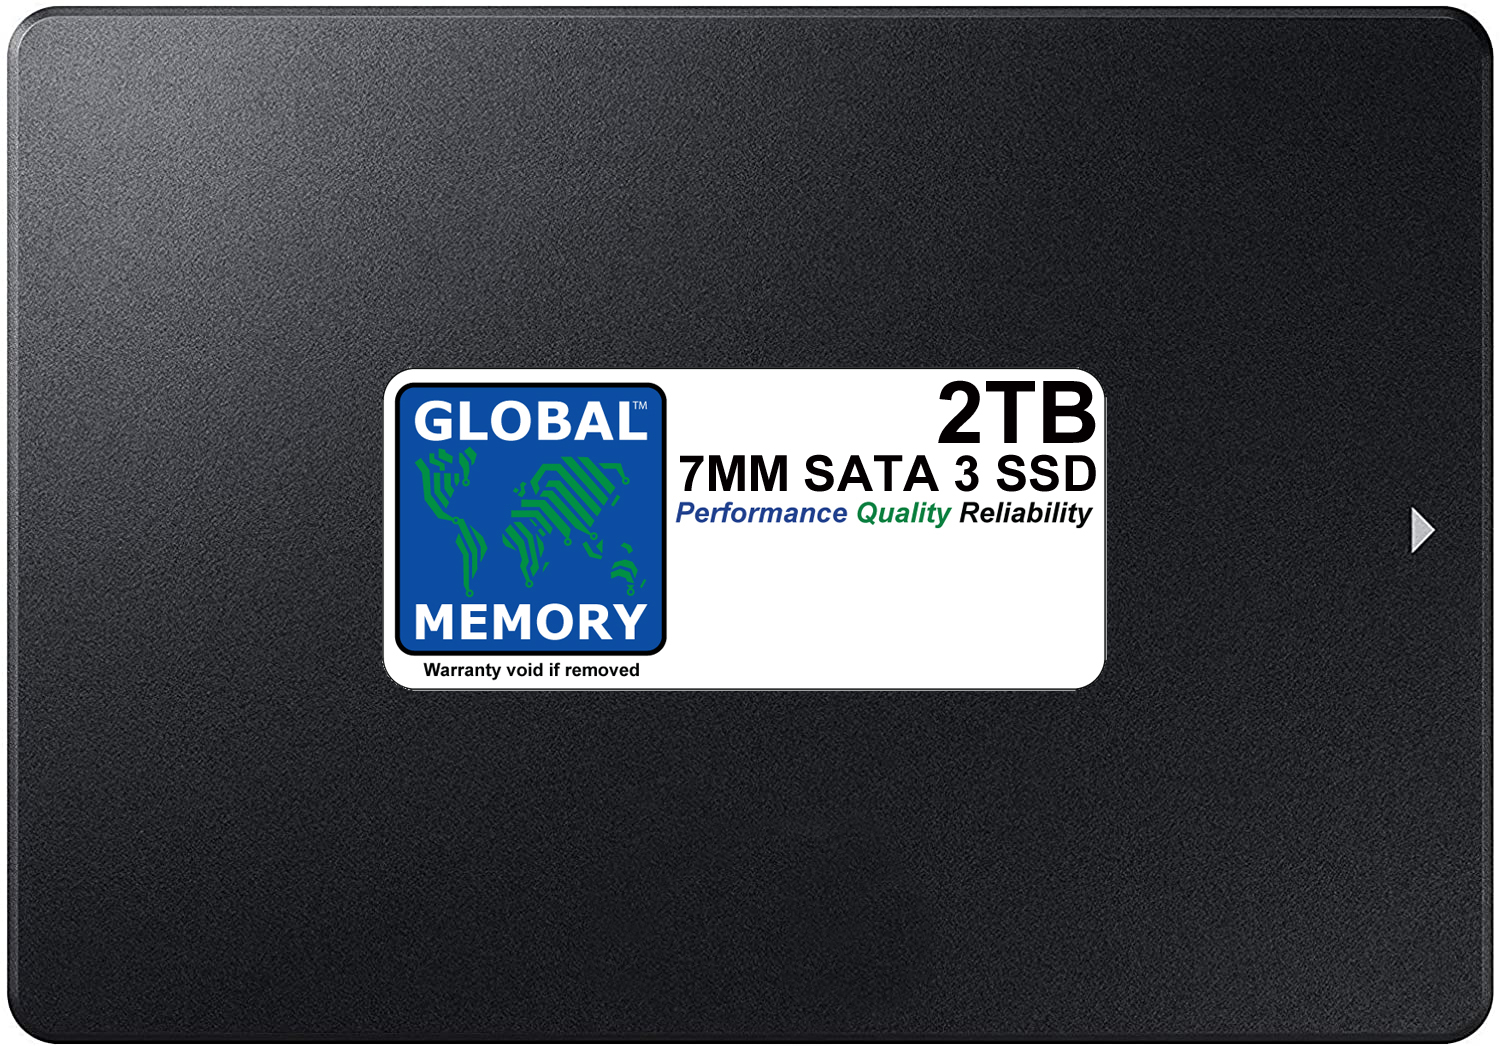 2TB 7mm SATA 3 SSD FOR LAPTOPS / DESKTOP PCs / SERVERS / WORKSTATIONS